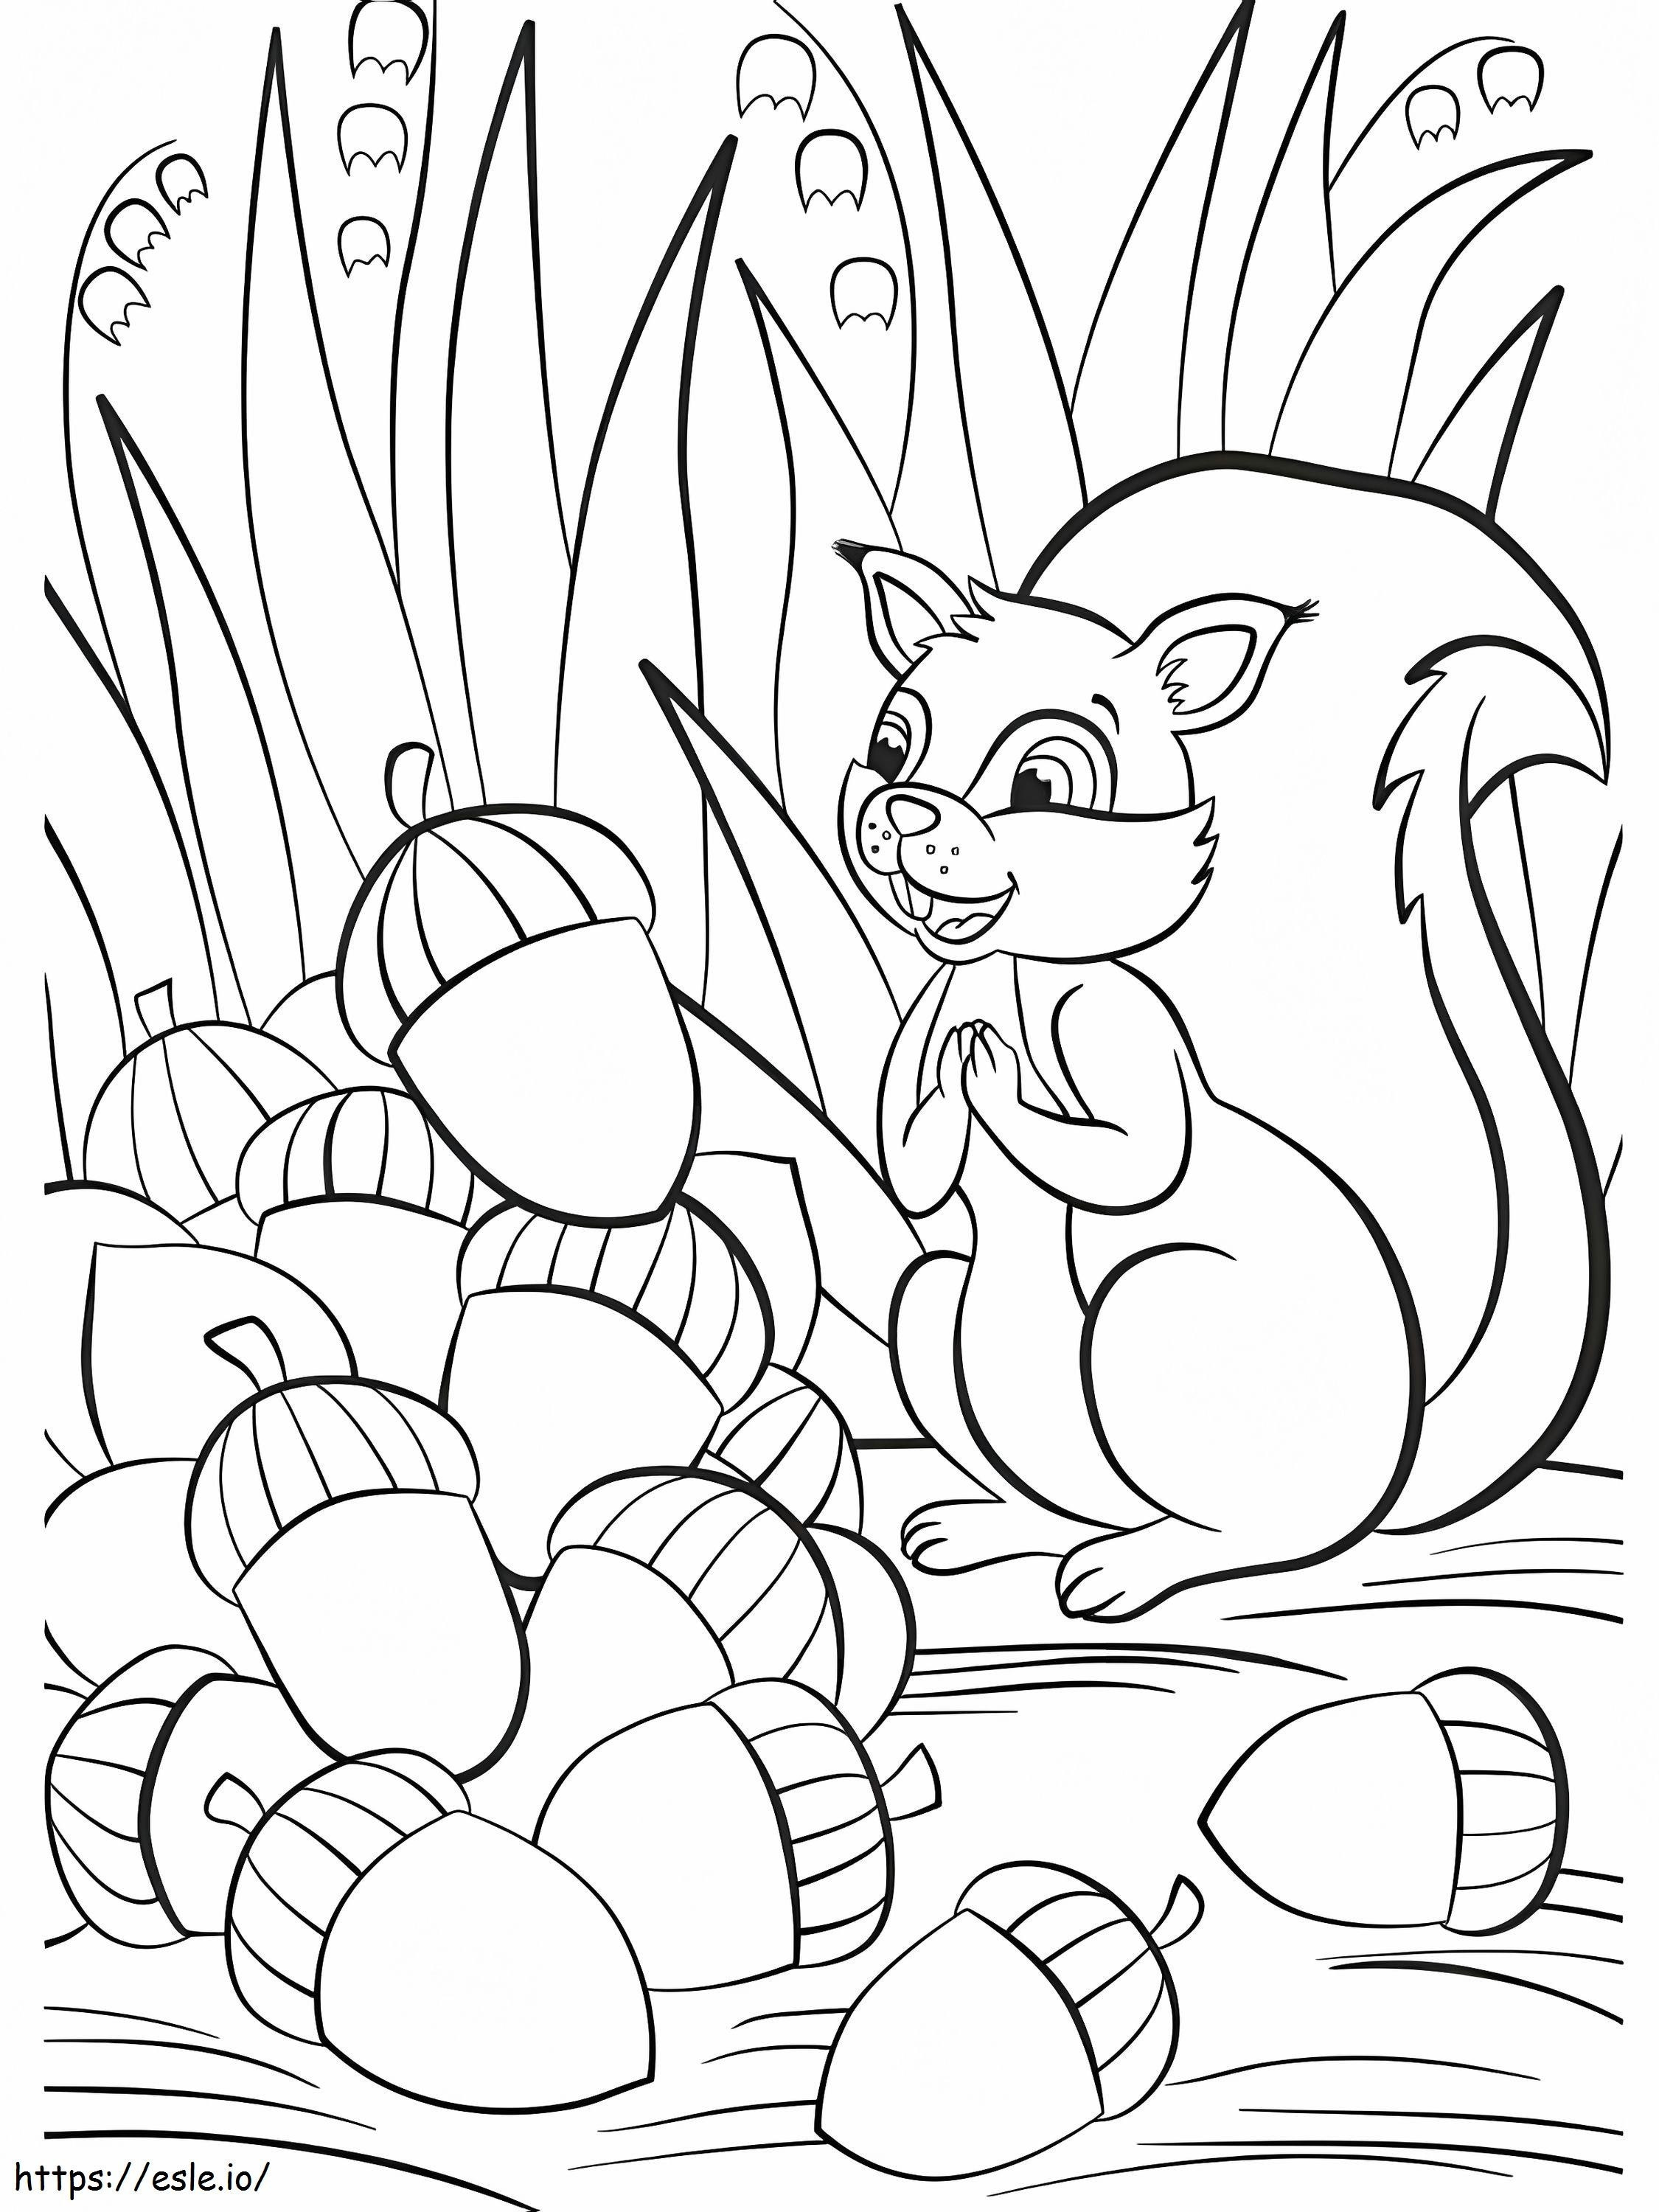 Happy Squirrel With Acorn coloring page